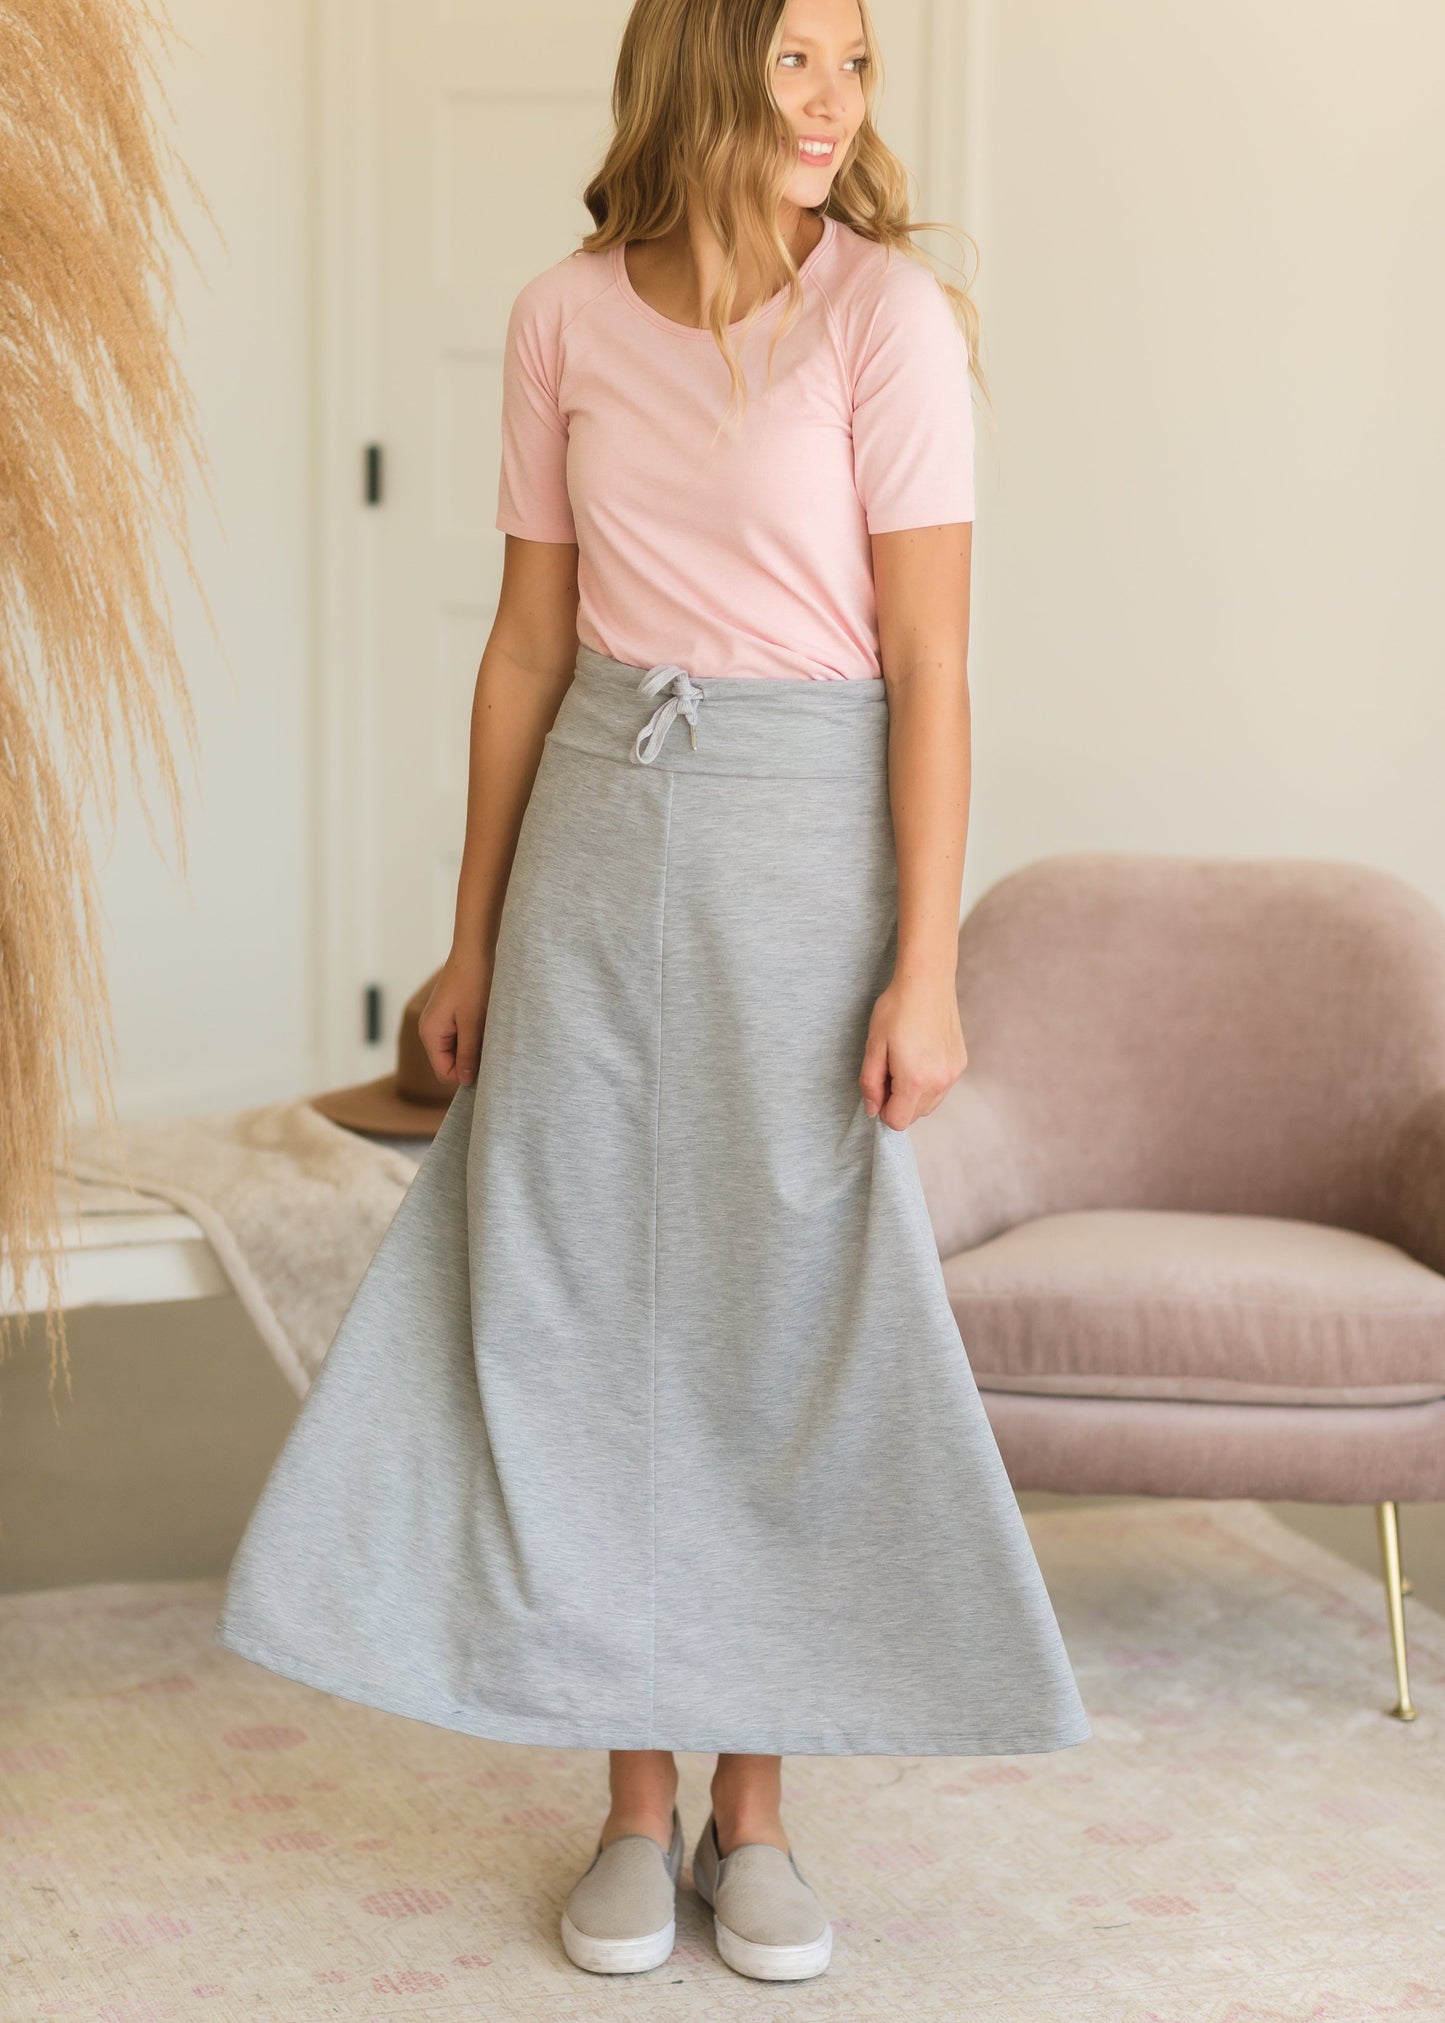 Addison Long Gray Knit A-Line Skirt - FINAL SALE Skirts